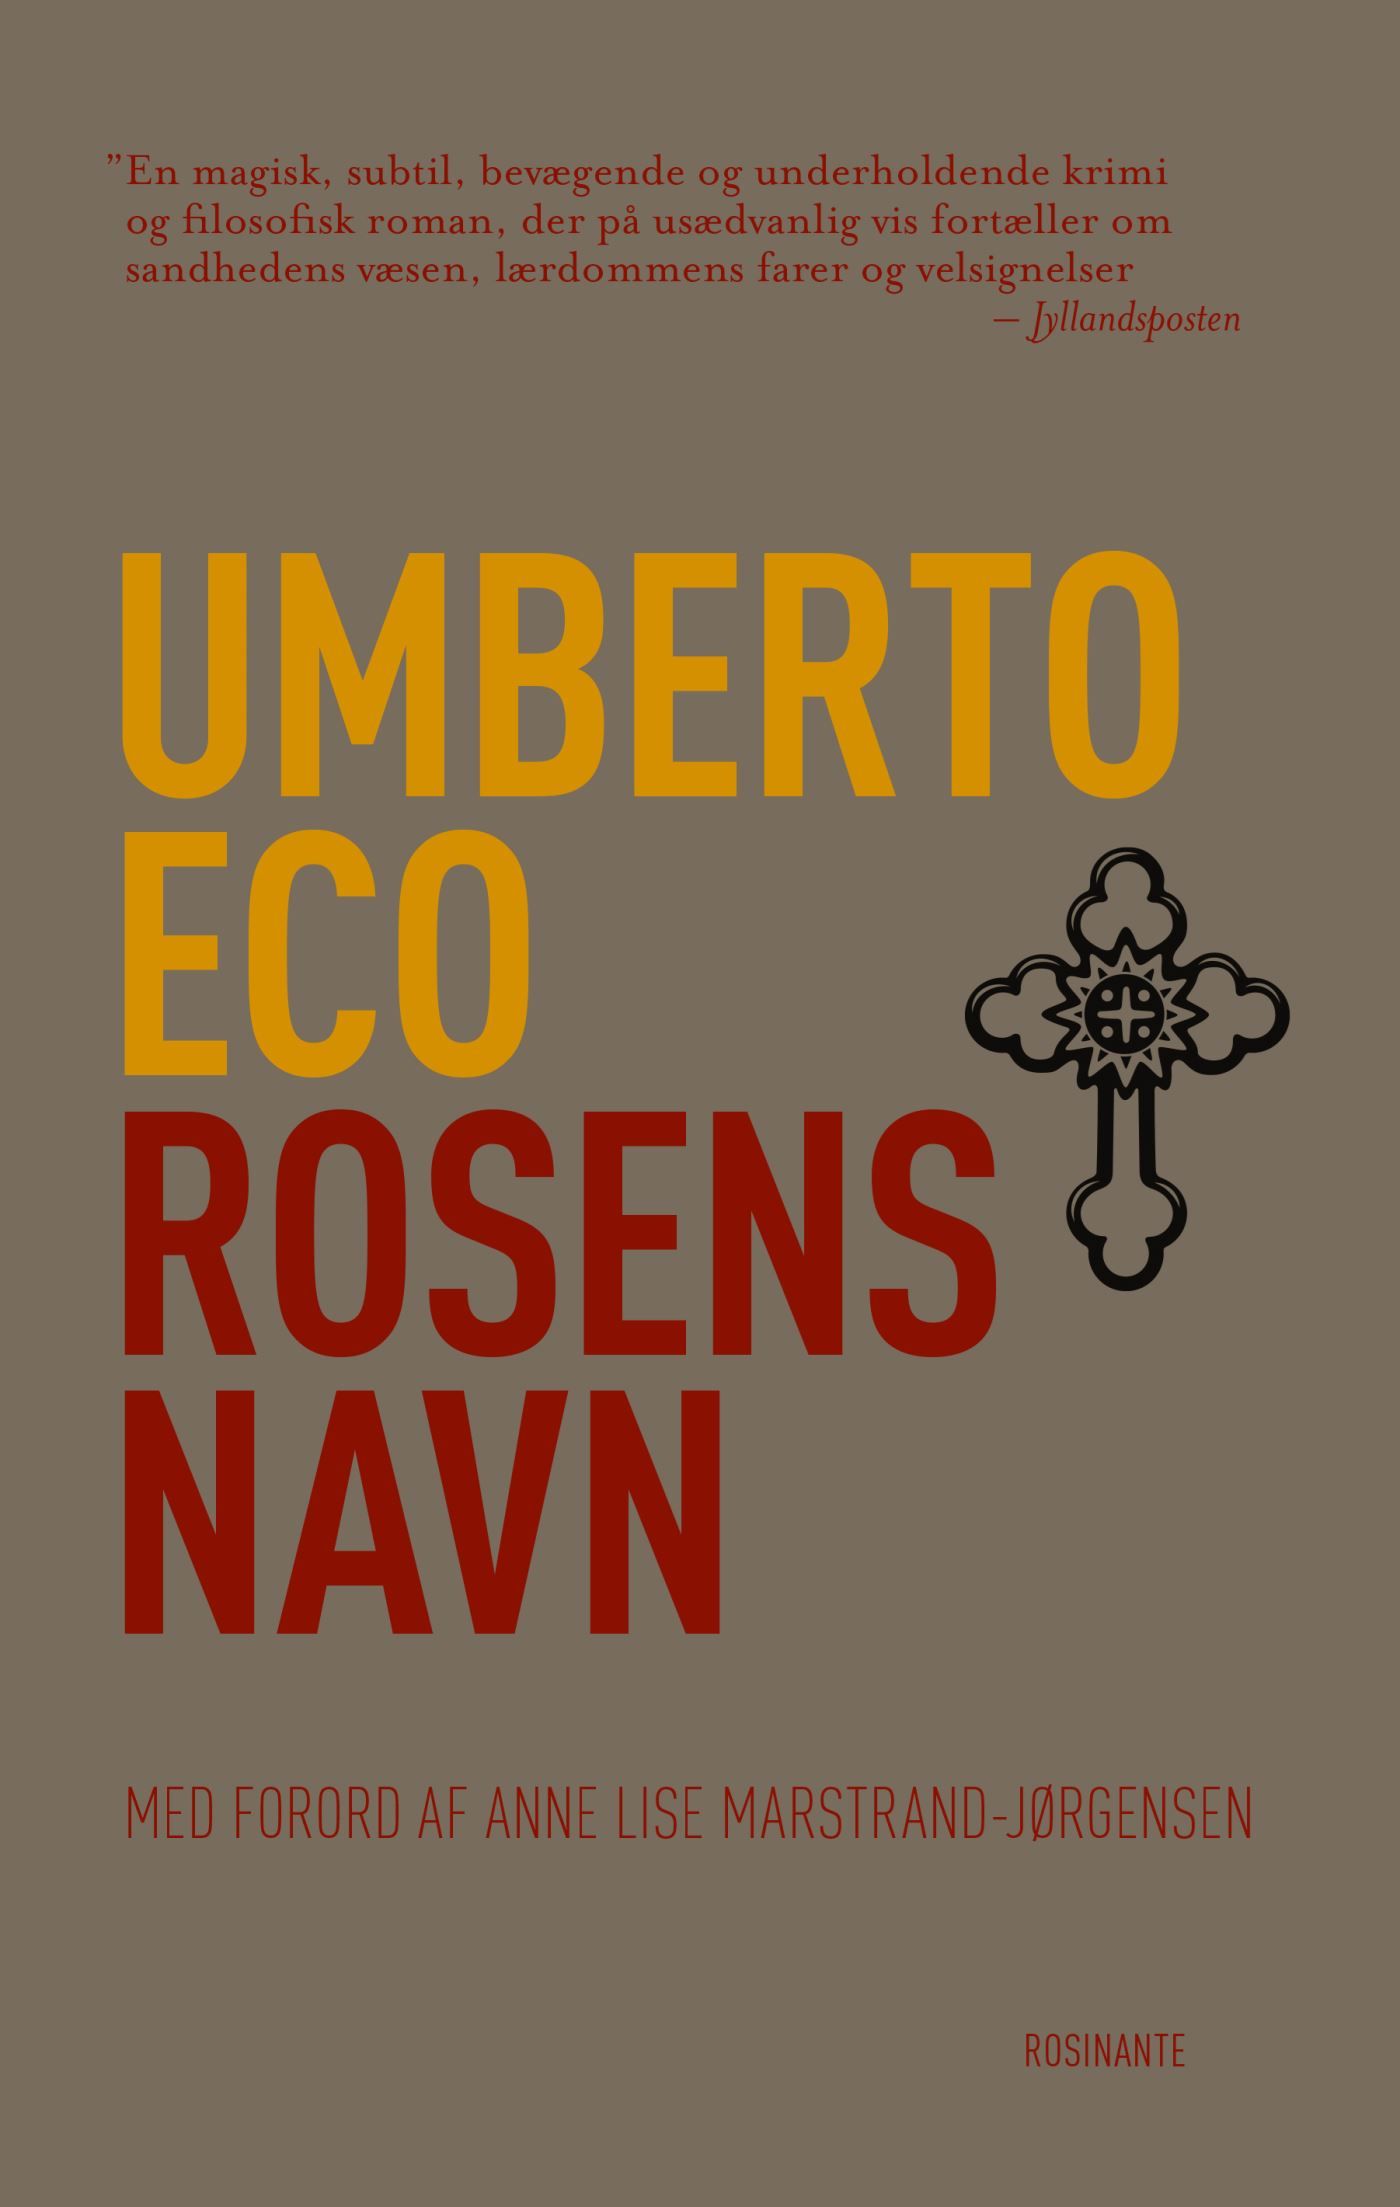 Rosens navn, ljudbok av Umberto Eco